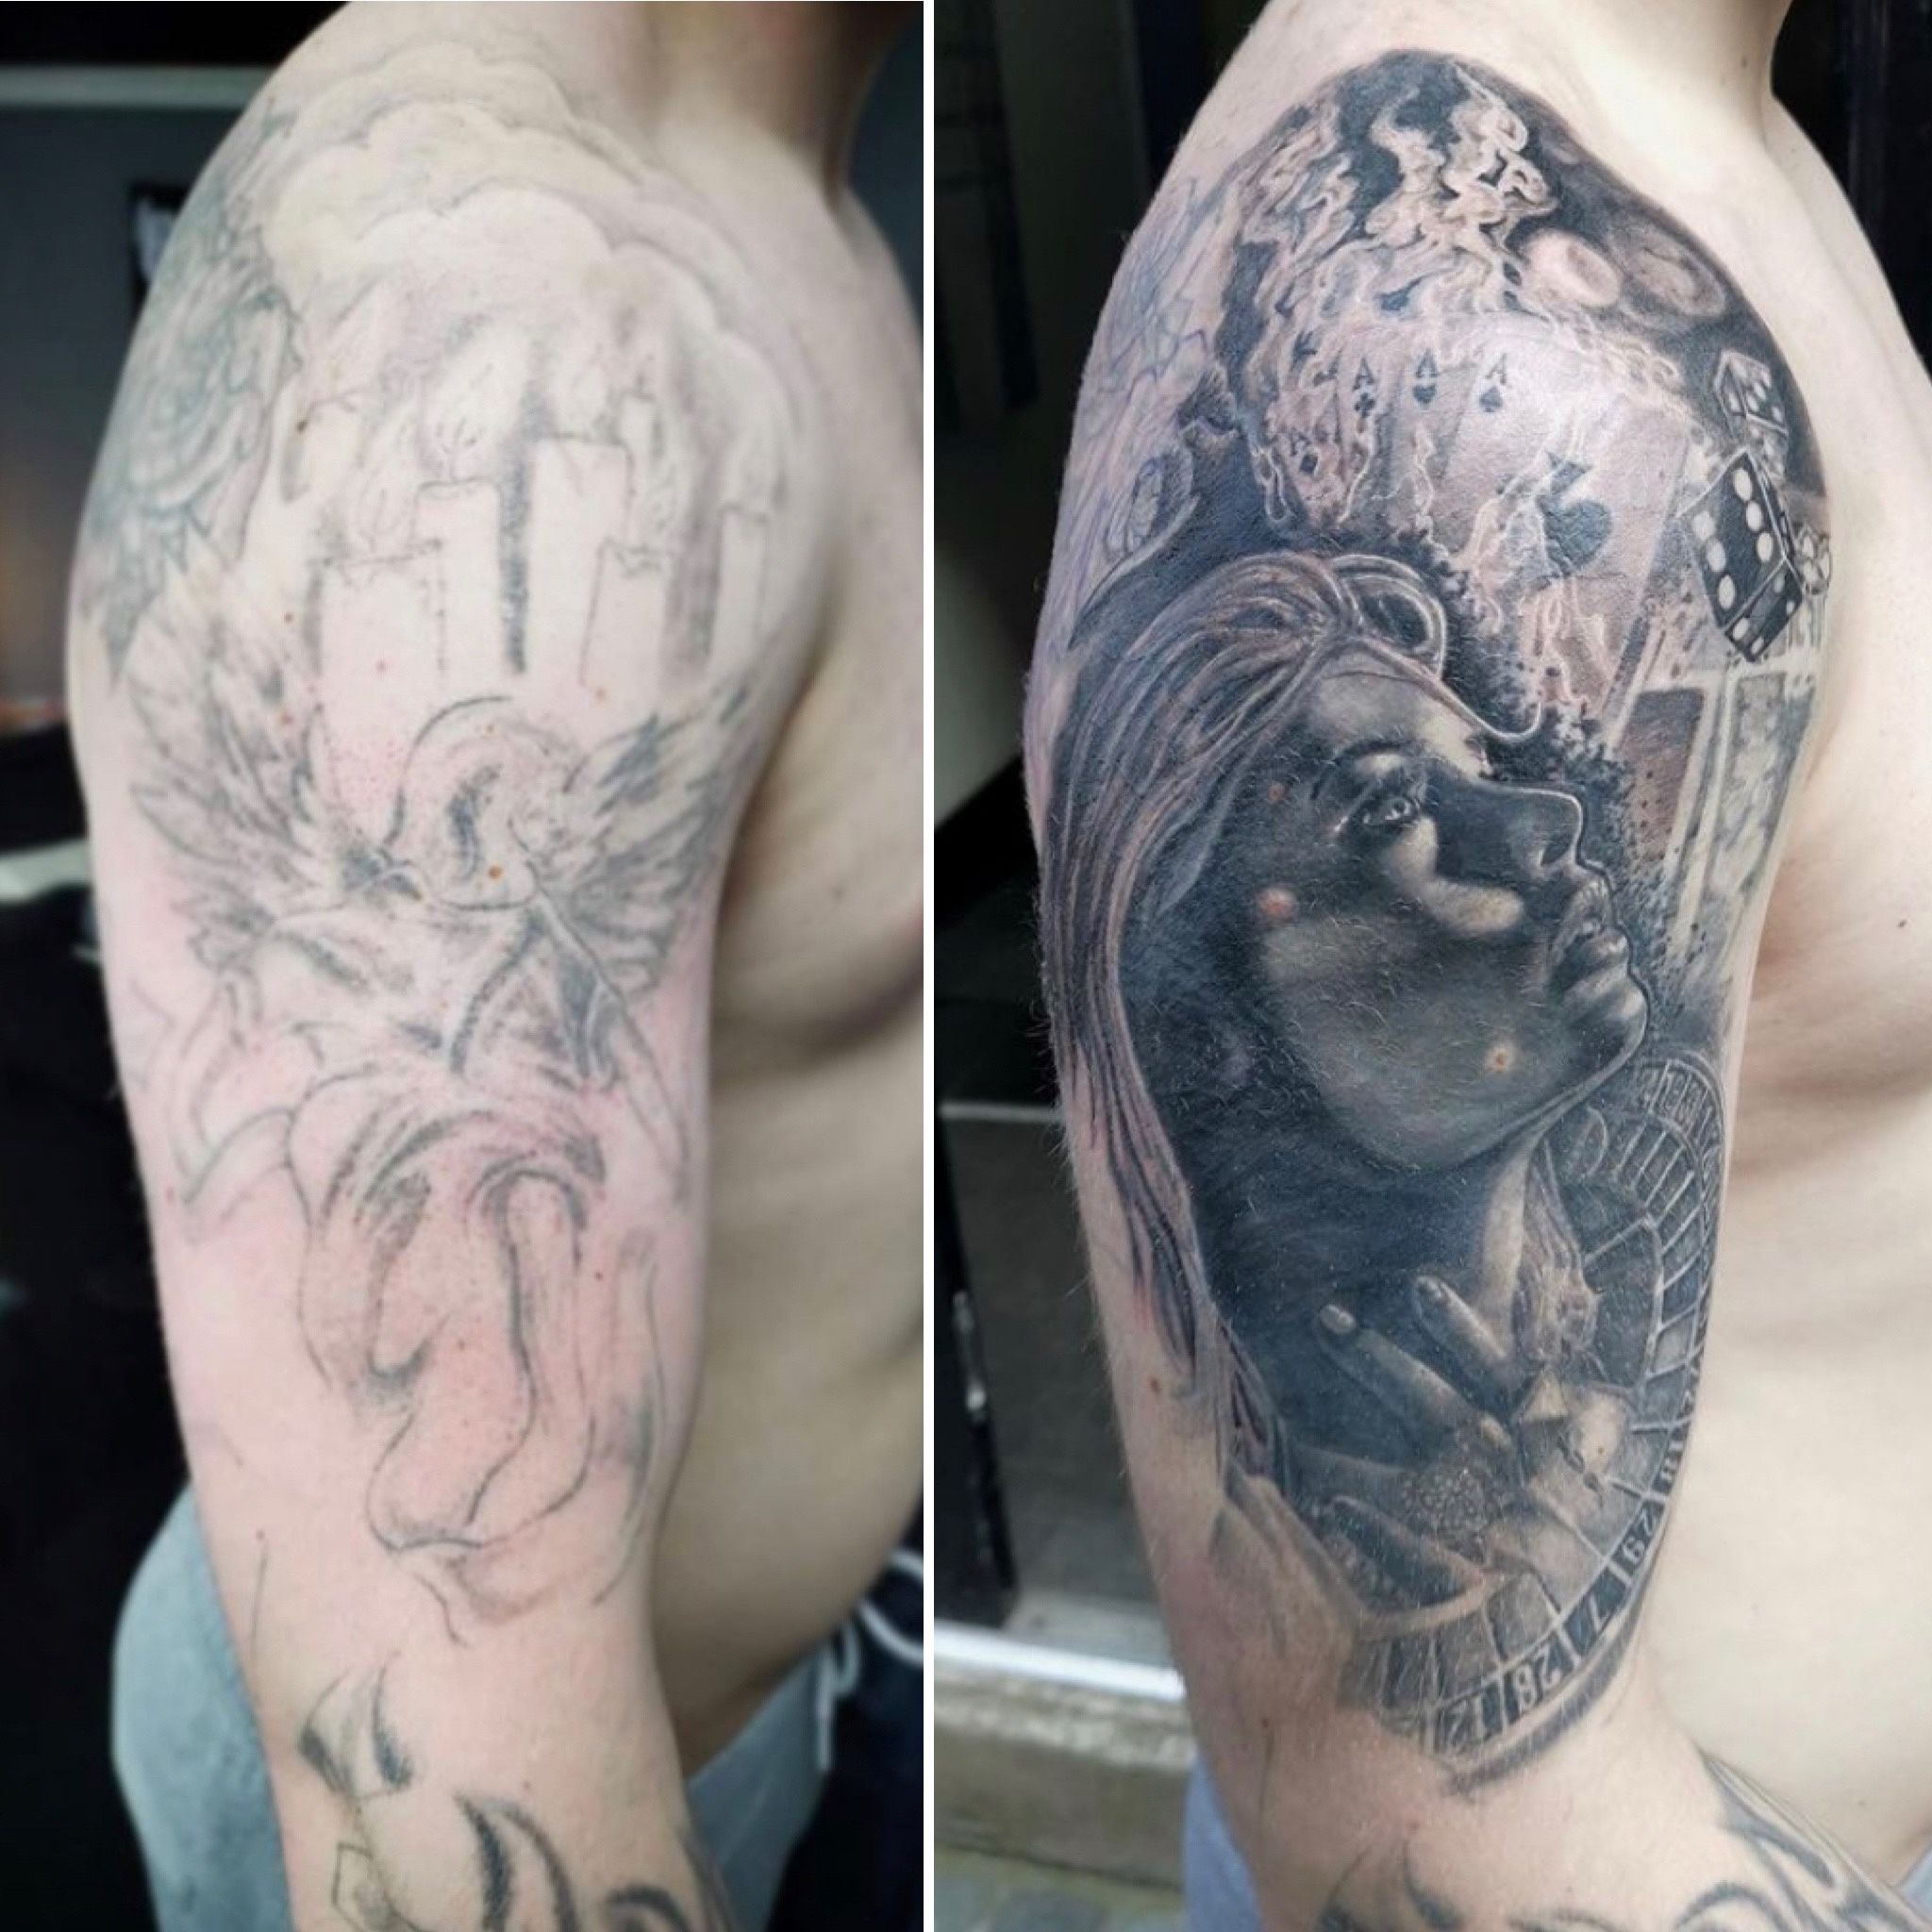 Laser Tattoo Removal Progress Photos